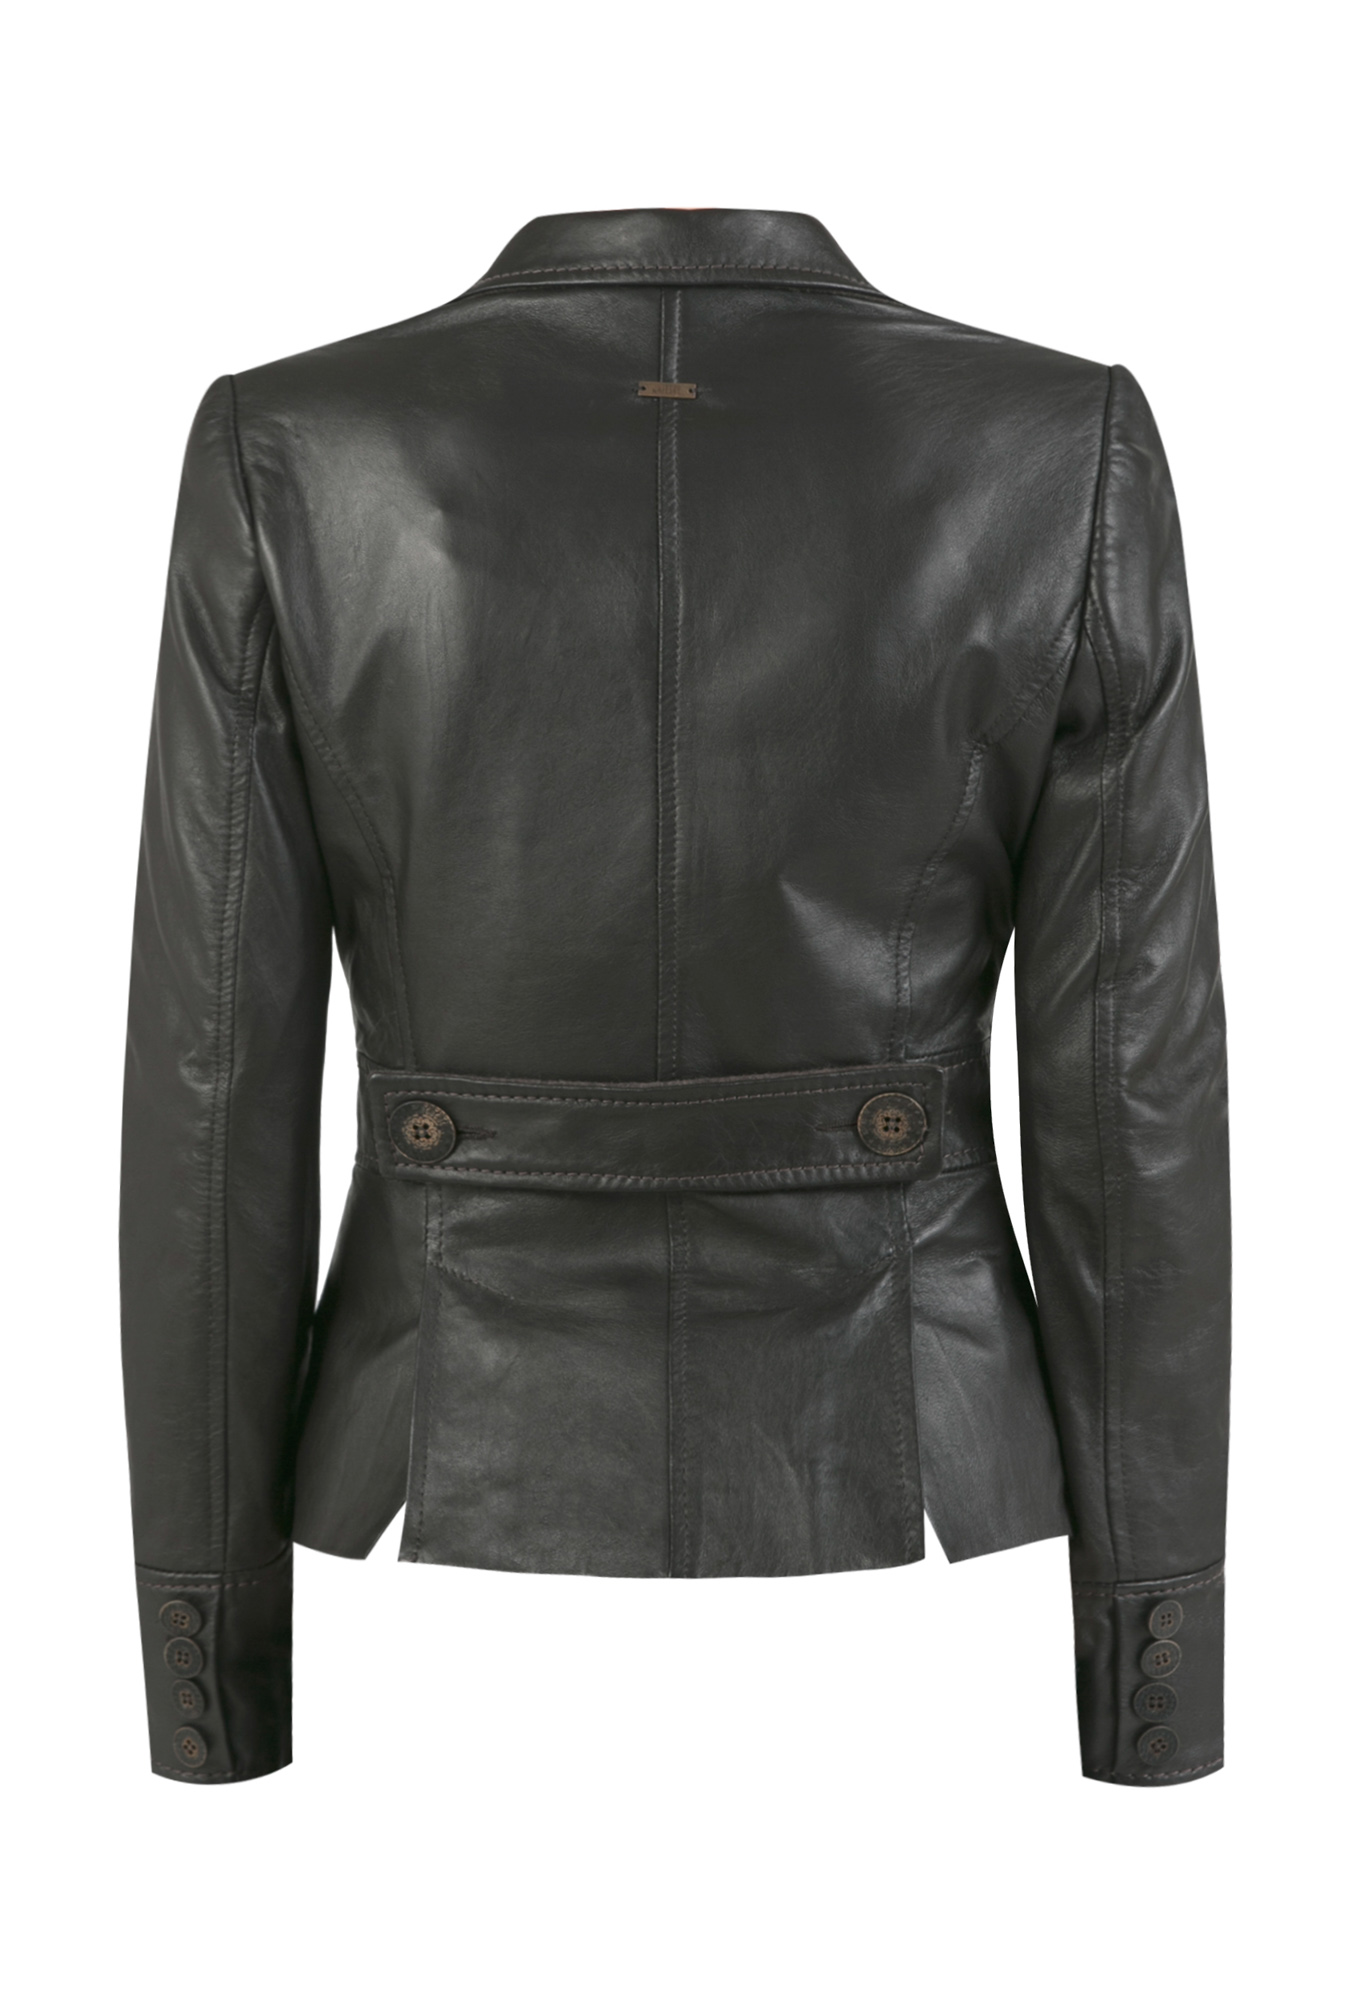 leather jacket, gray leather jacket, gray genuine leather jacket, Italian leather jacket, natural leather jacket, dark gray leather jacket, leather by rieske jacket, limited edition jacket, premium quality jacket